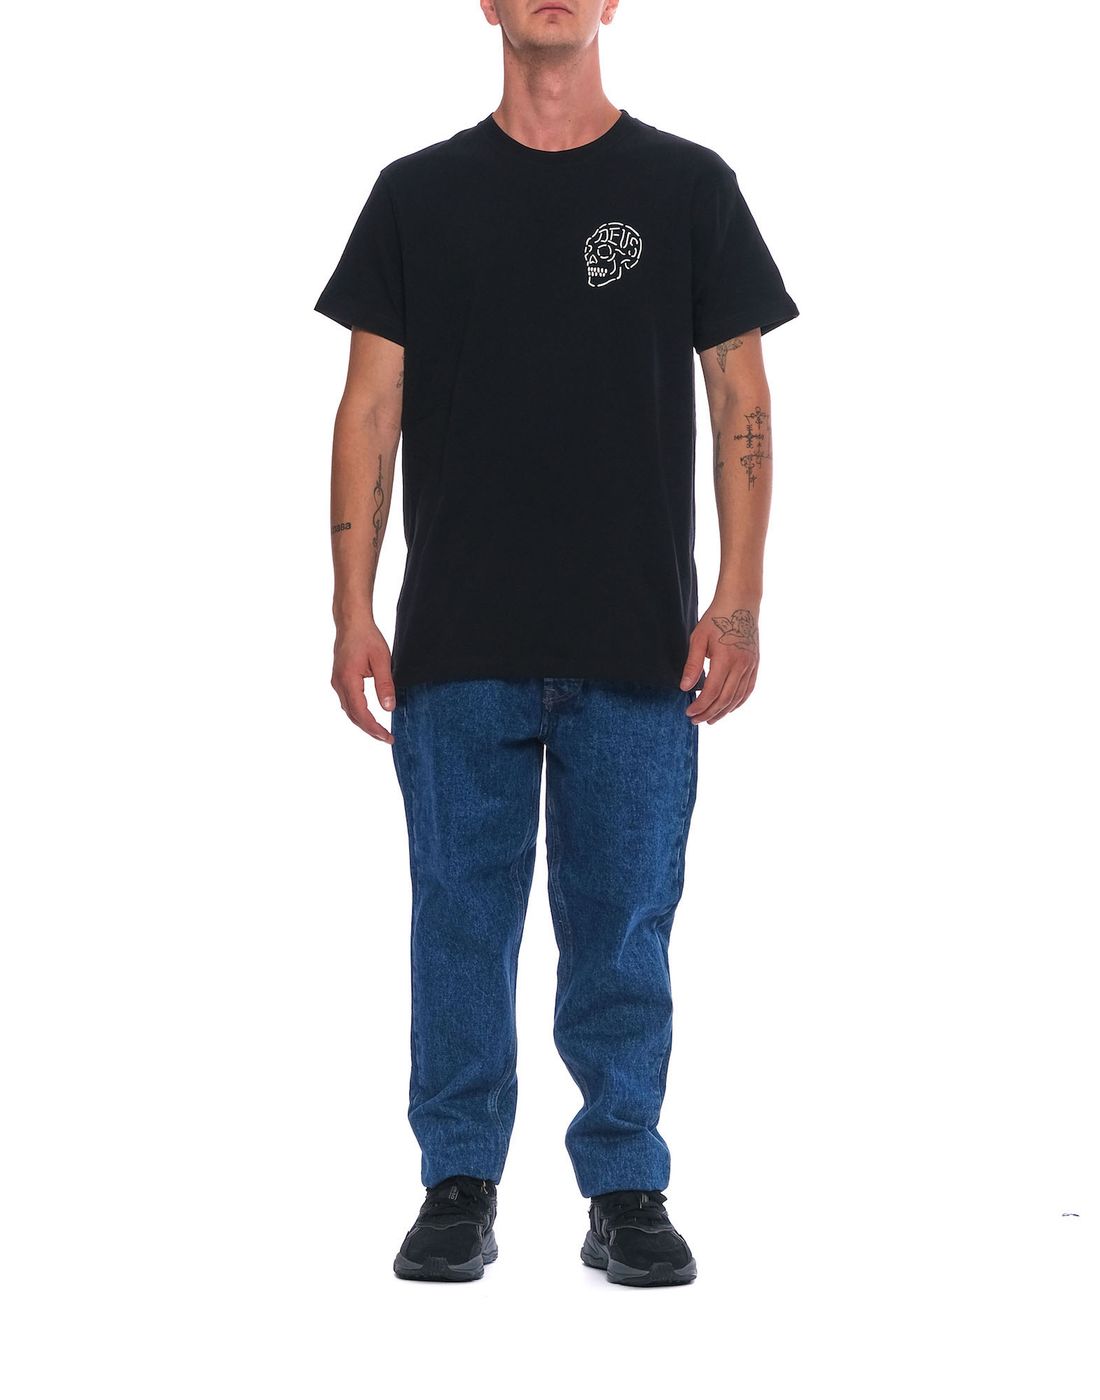 T-shirt for man DMH31645C BLK Deus Ex Machina